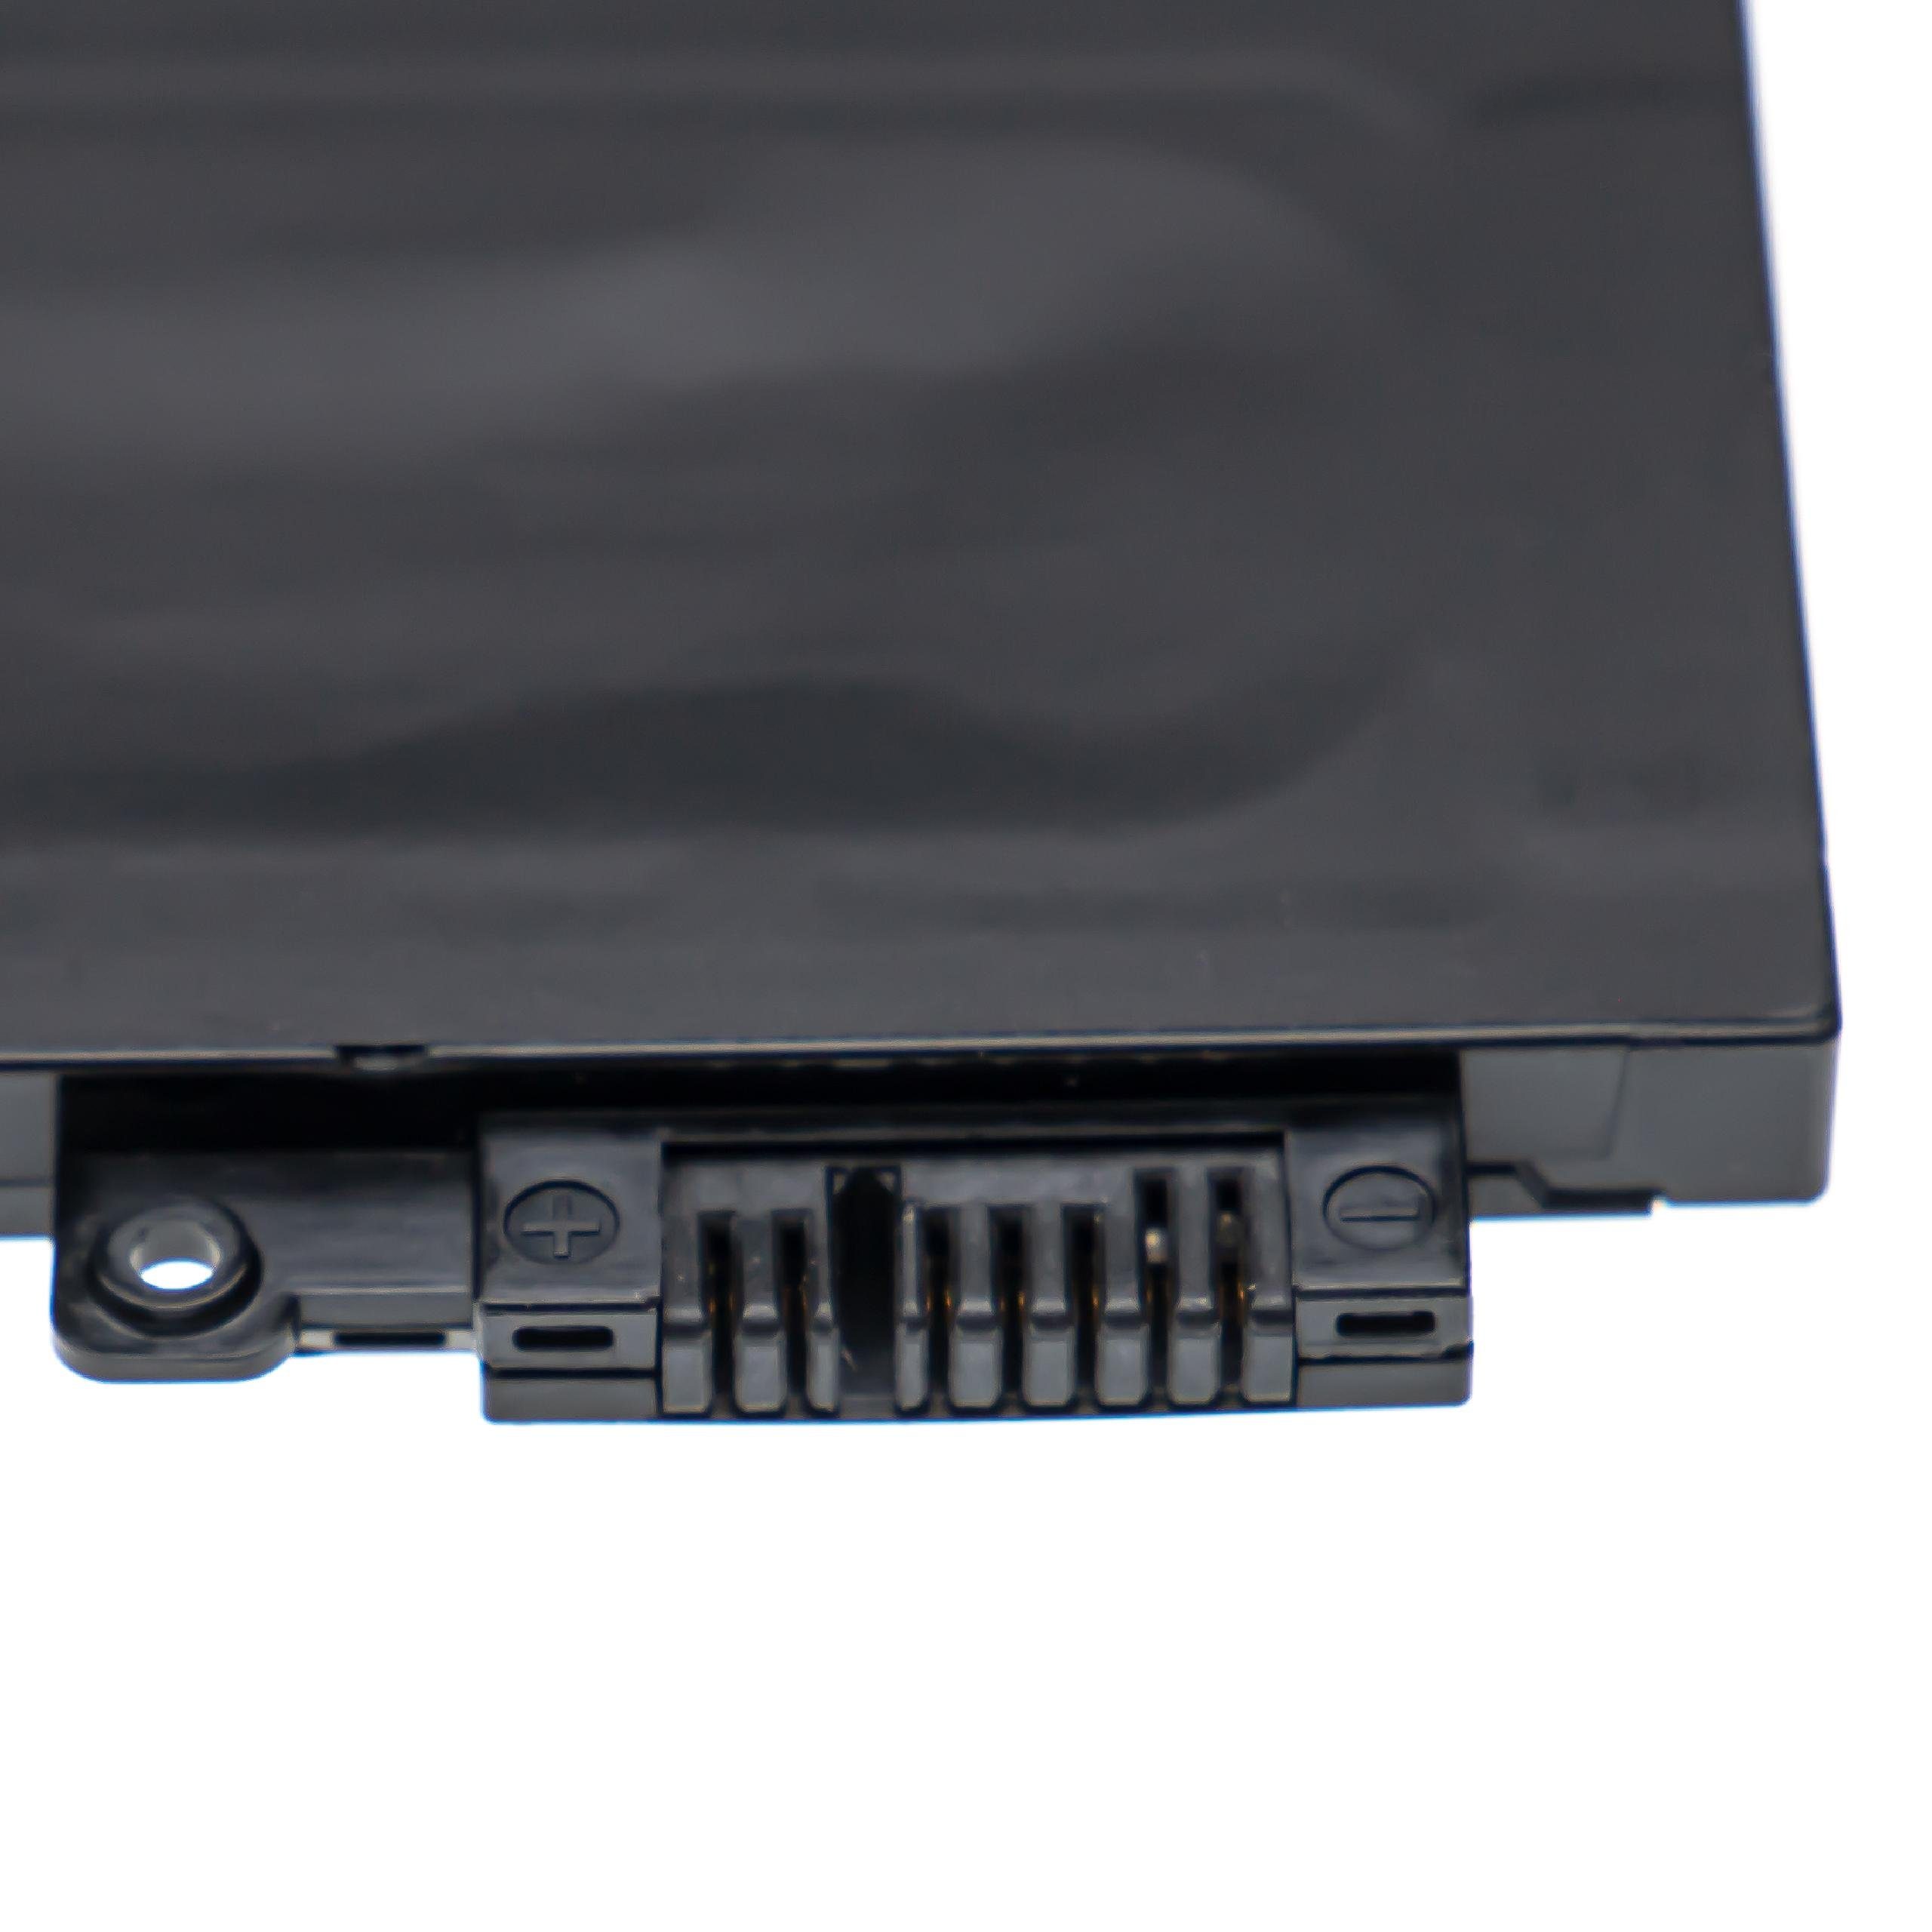 für 2000 mAh Laptop-Akku T460s 20F9004GUS, ThinkPad Lenovo T460s passend vhbw 20F9004EUS, T460s